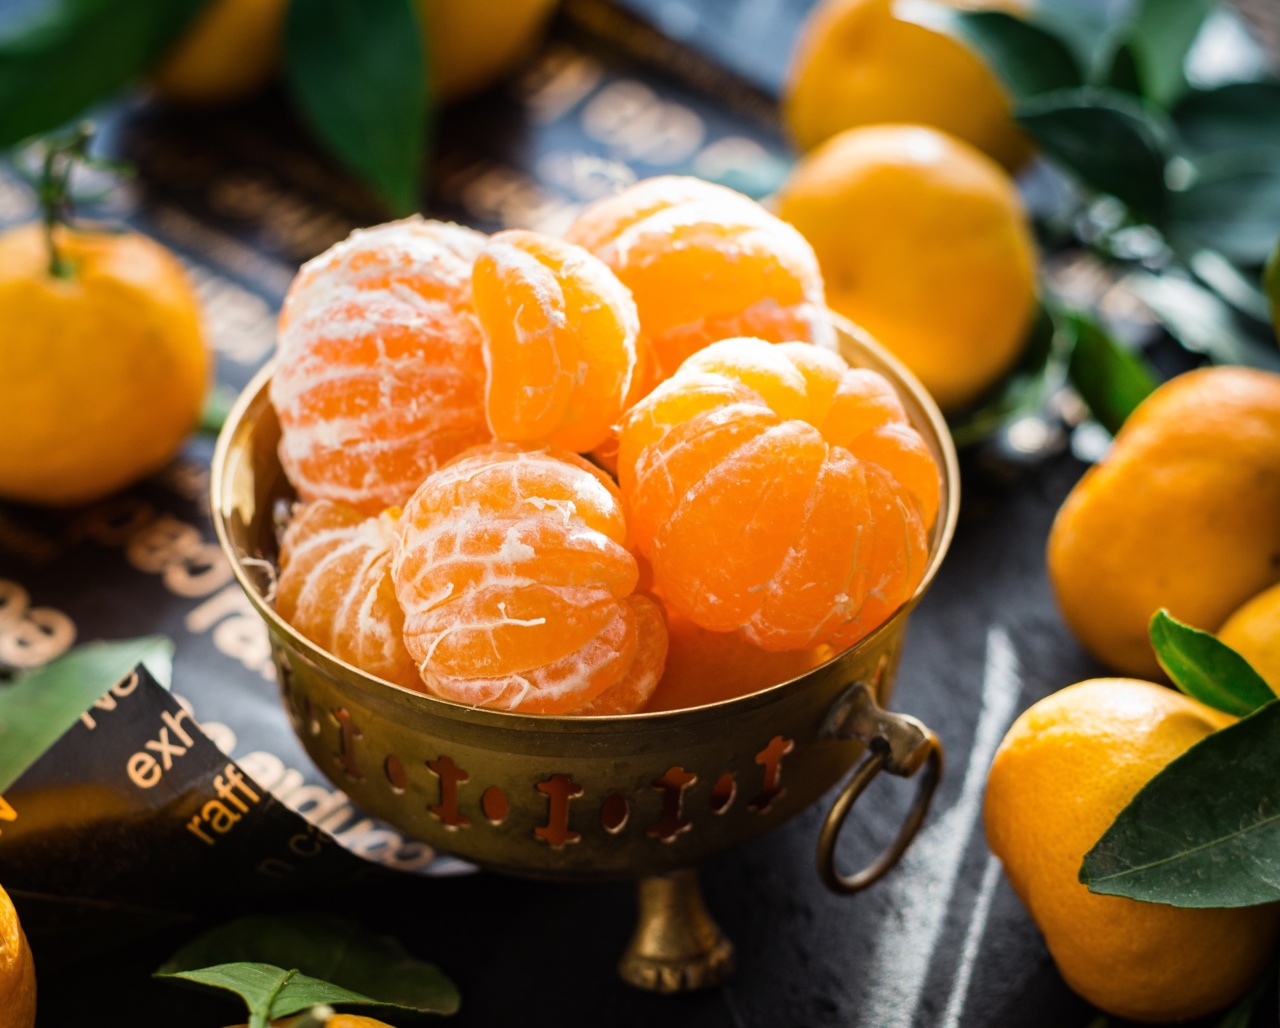 Debunking the myth: Does orange juice really raise blood pressure?